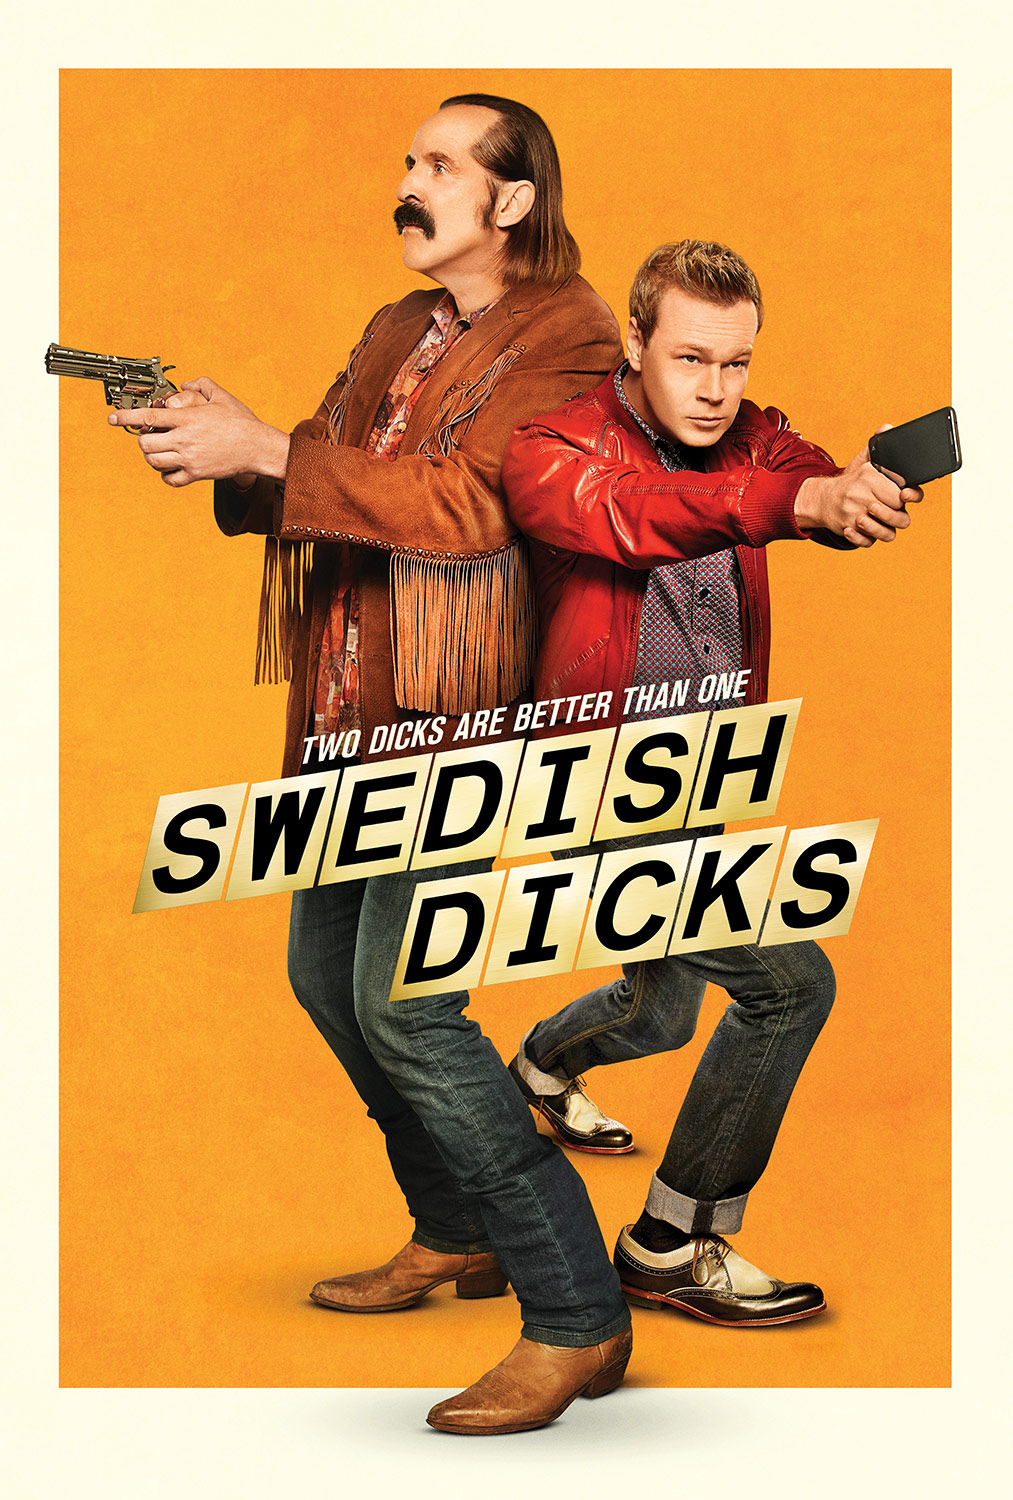 SWEDISH DICKS